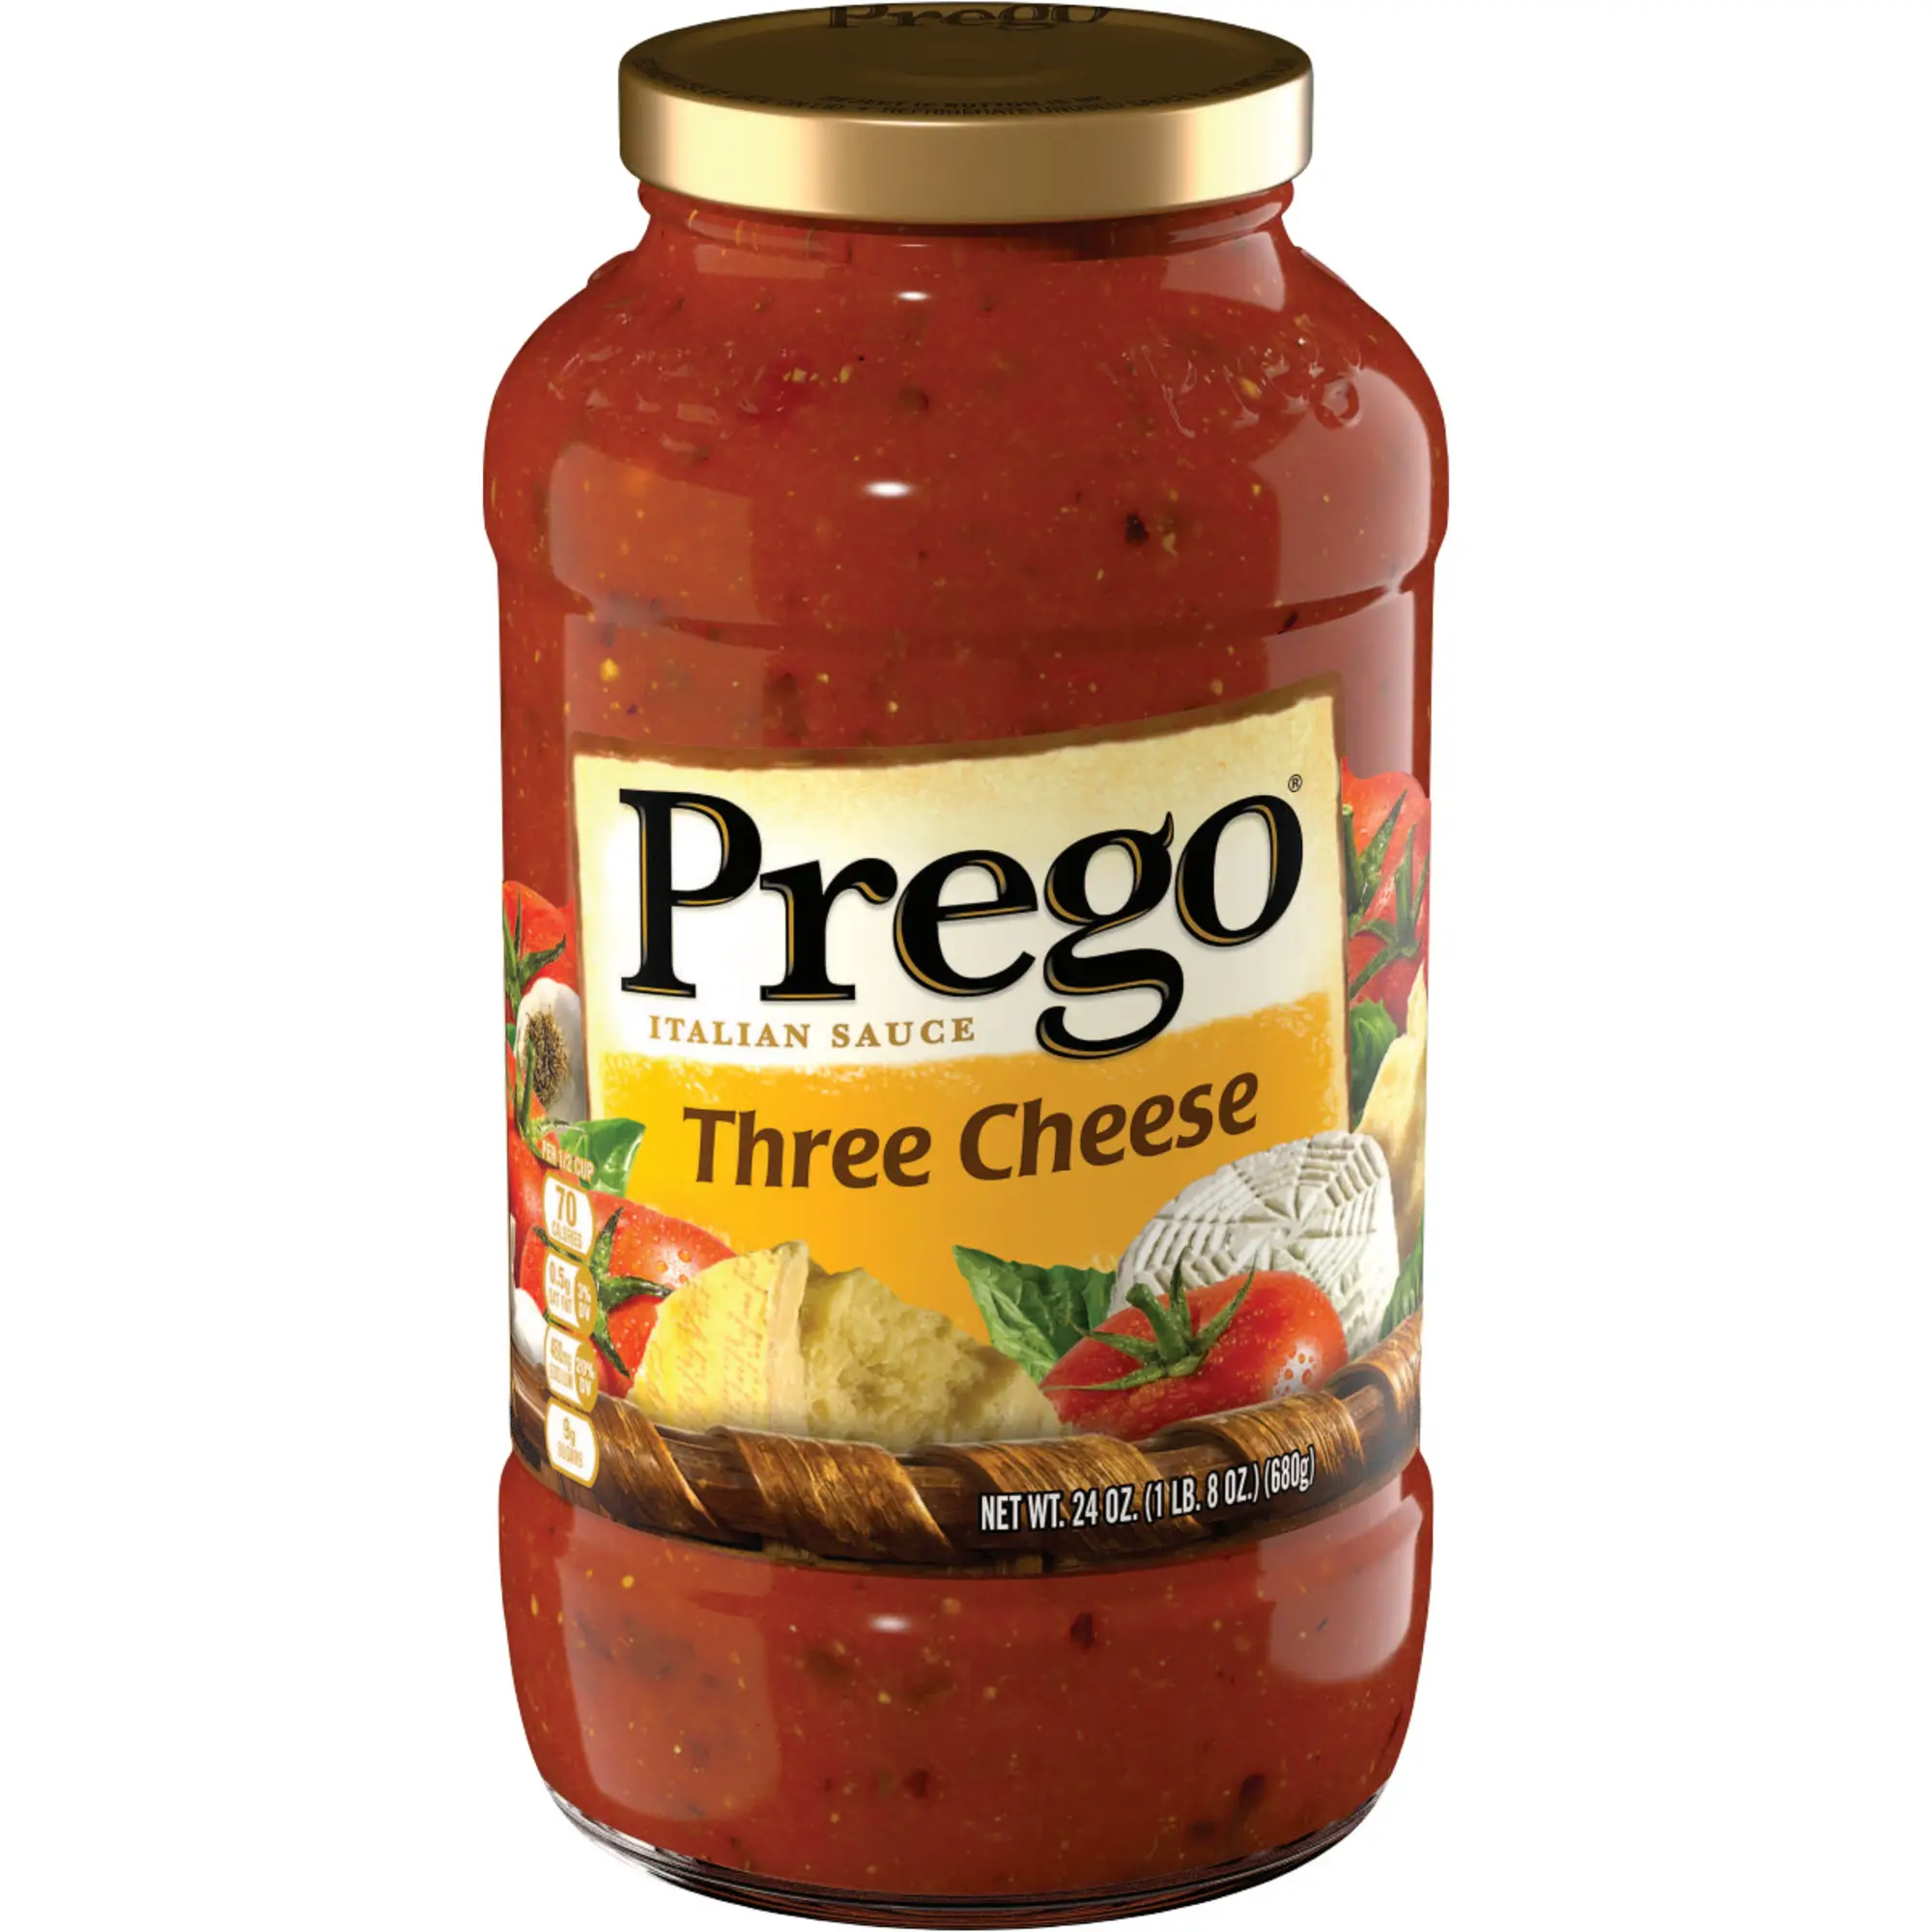 Prego Three Cheese Italian Sauce, 24 oz.